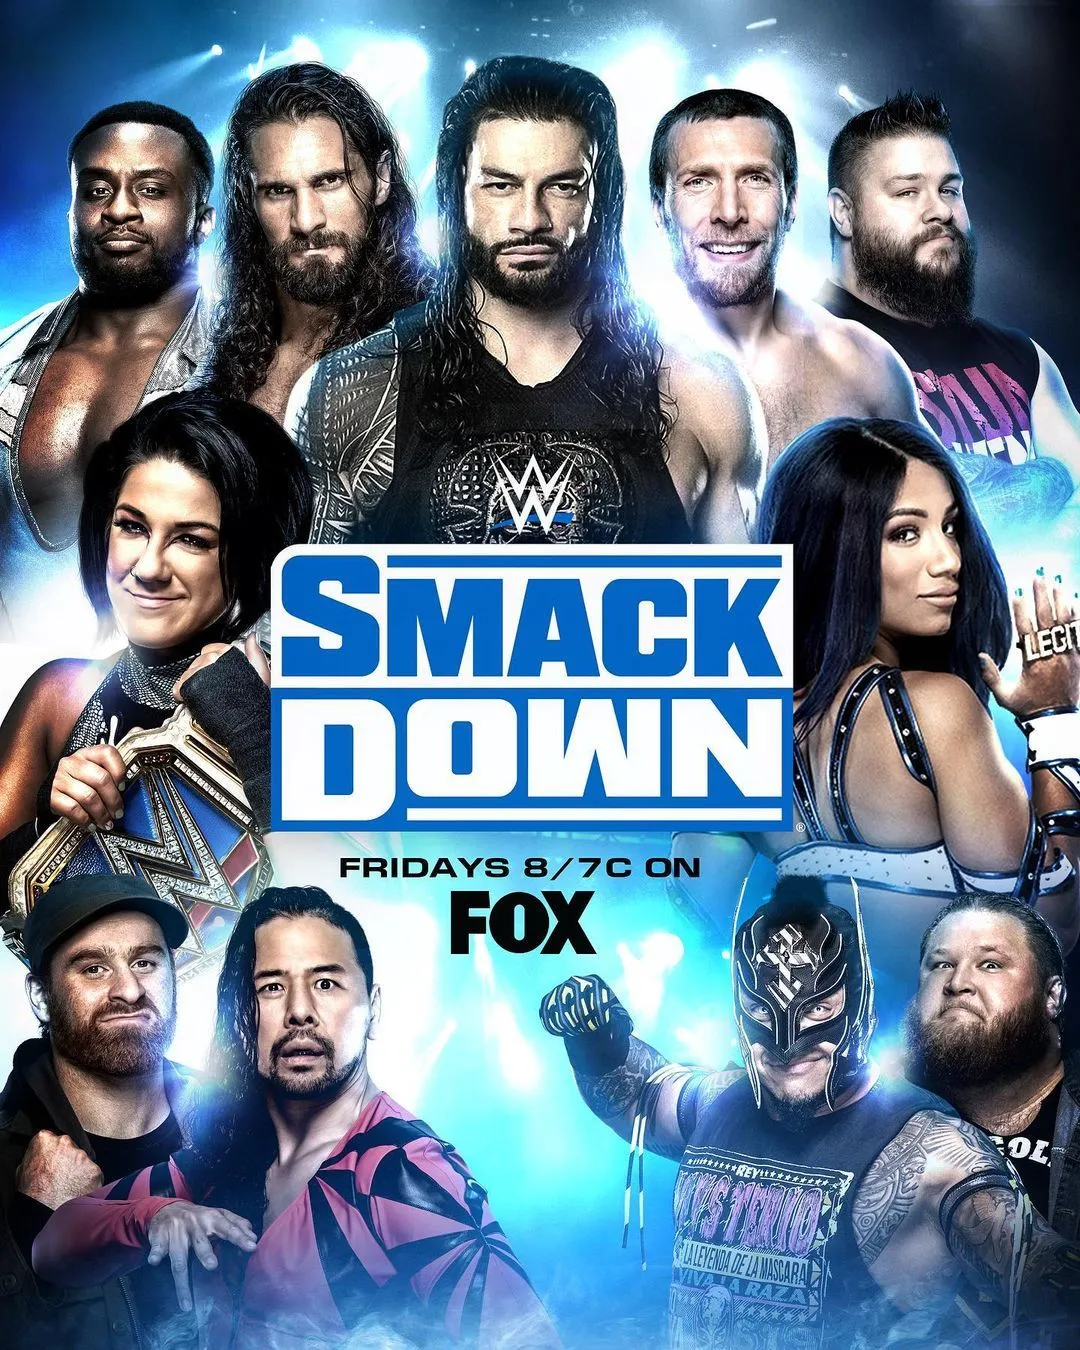 WWE Friday Night SmackDown (5 January 2024) English 720p HDRip 800MB | 350MB Dow